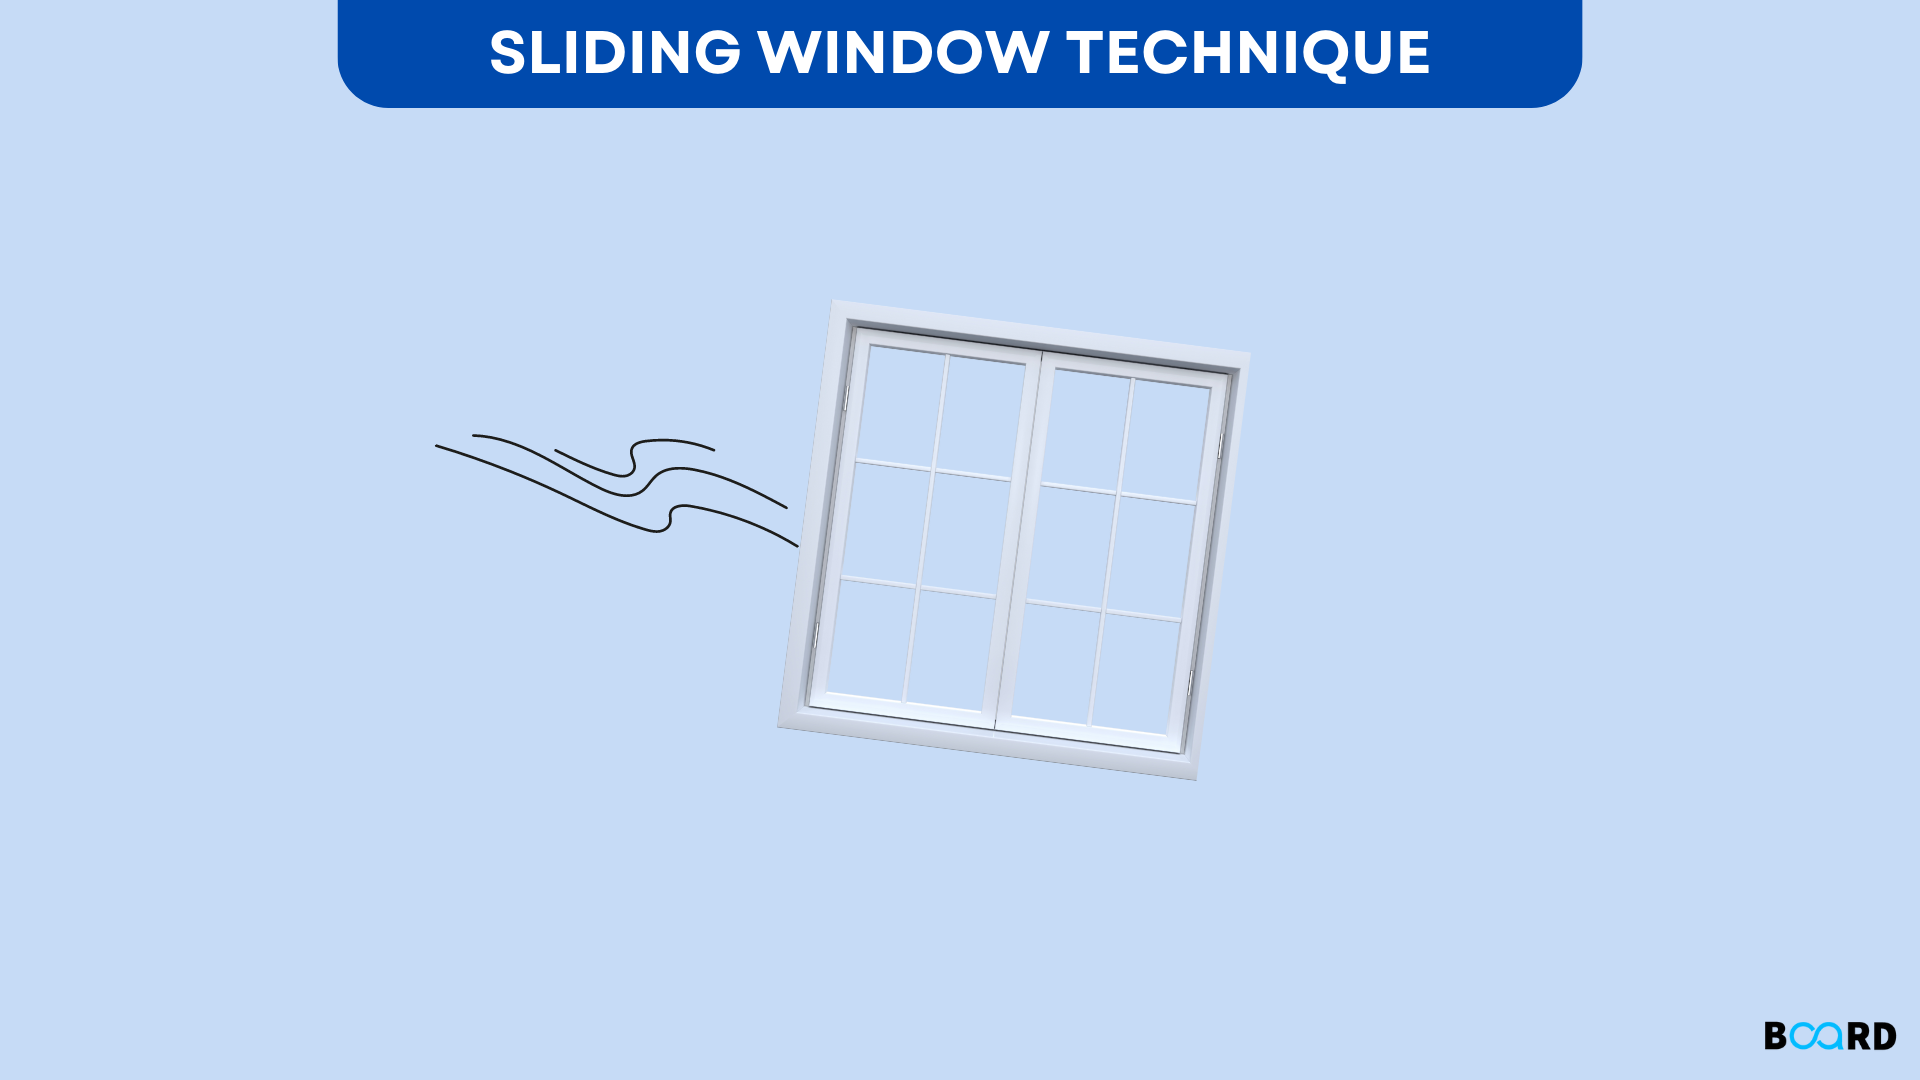 Sliding Window Problem – C++ Implementation